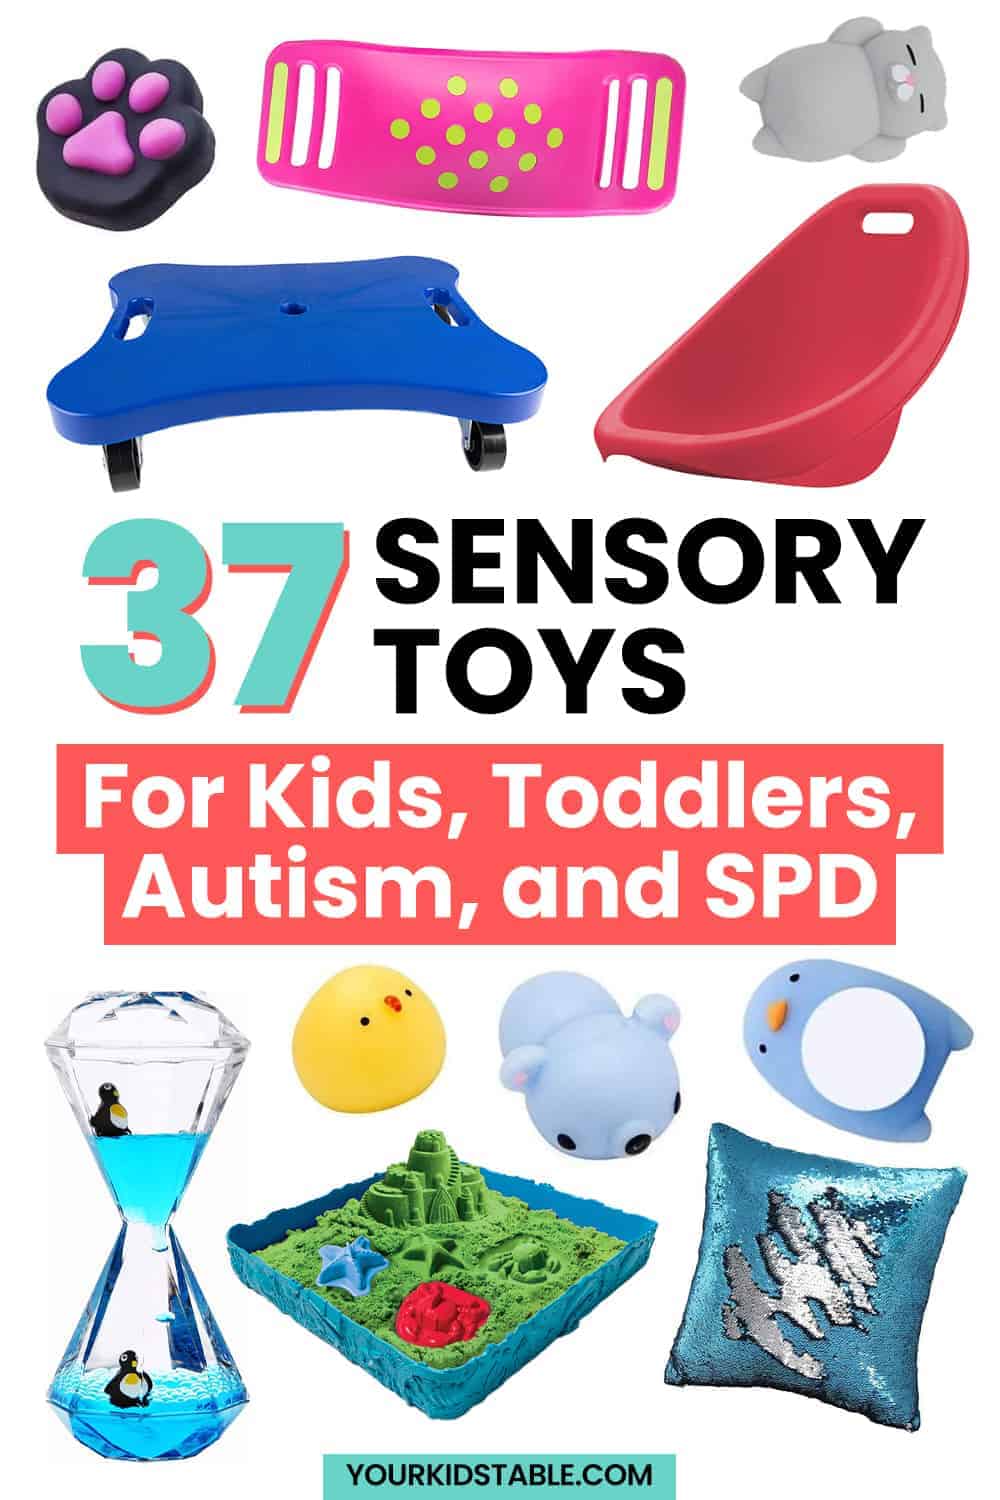 https://yourkidstable.com/wp-content/uploads/2018/11/37-sensory-toys-pinterest-1.jpg